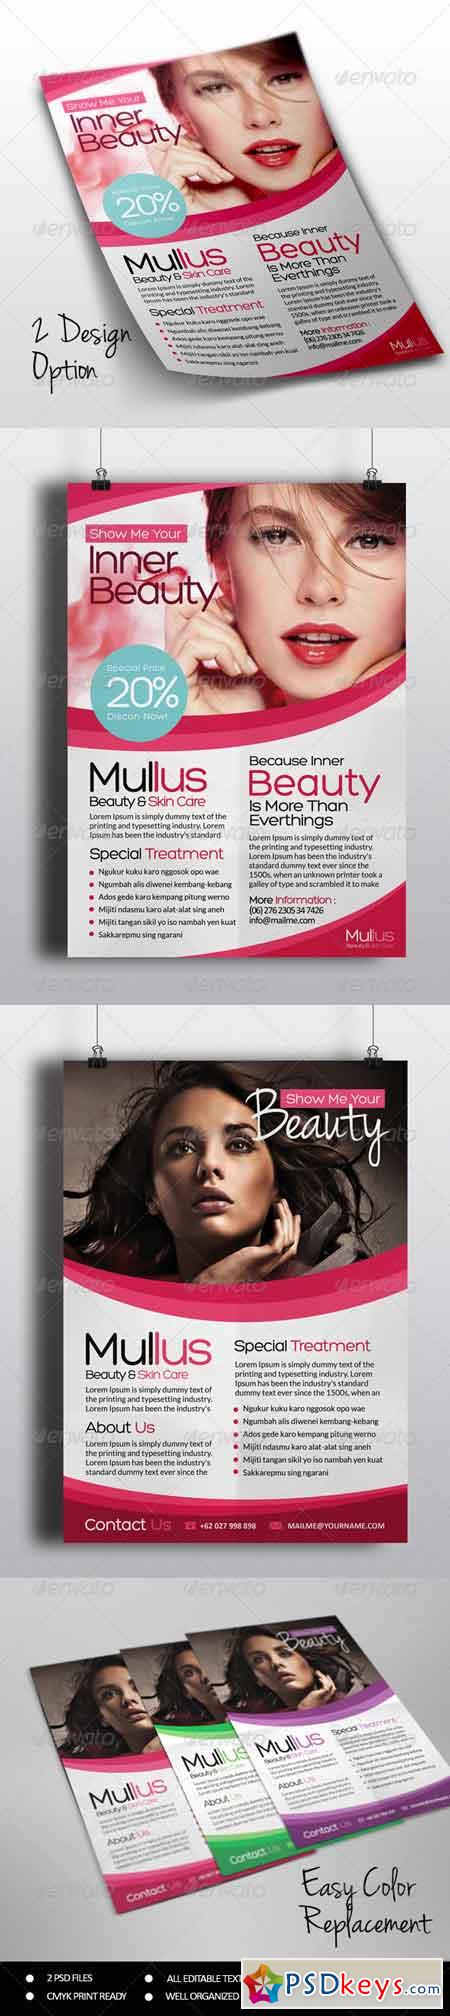 Beauty Care Flyer 7400173